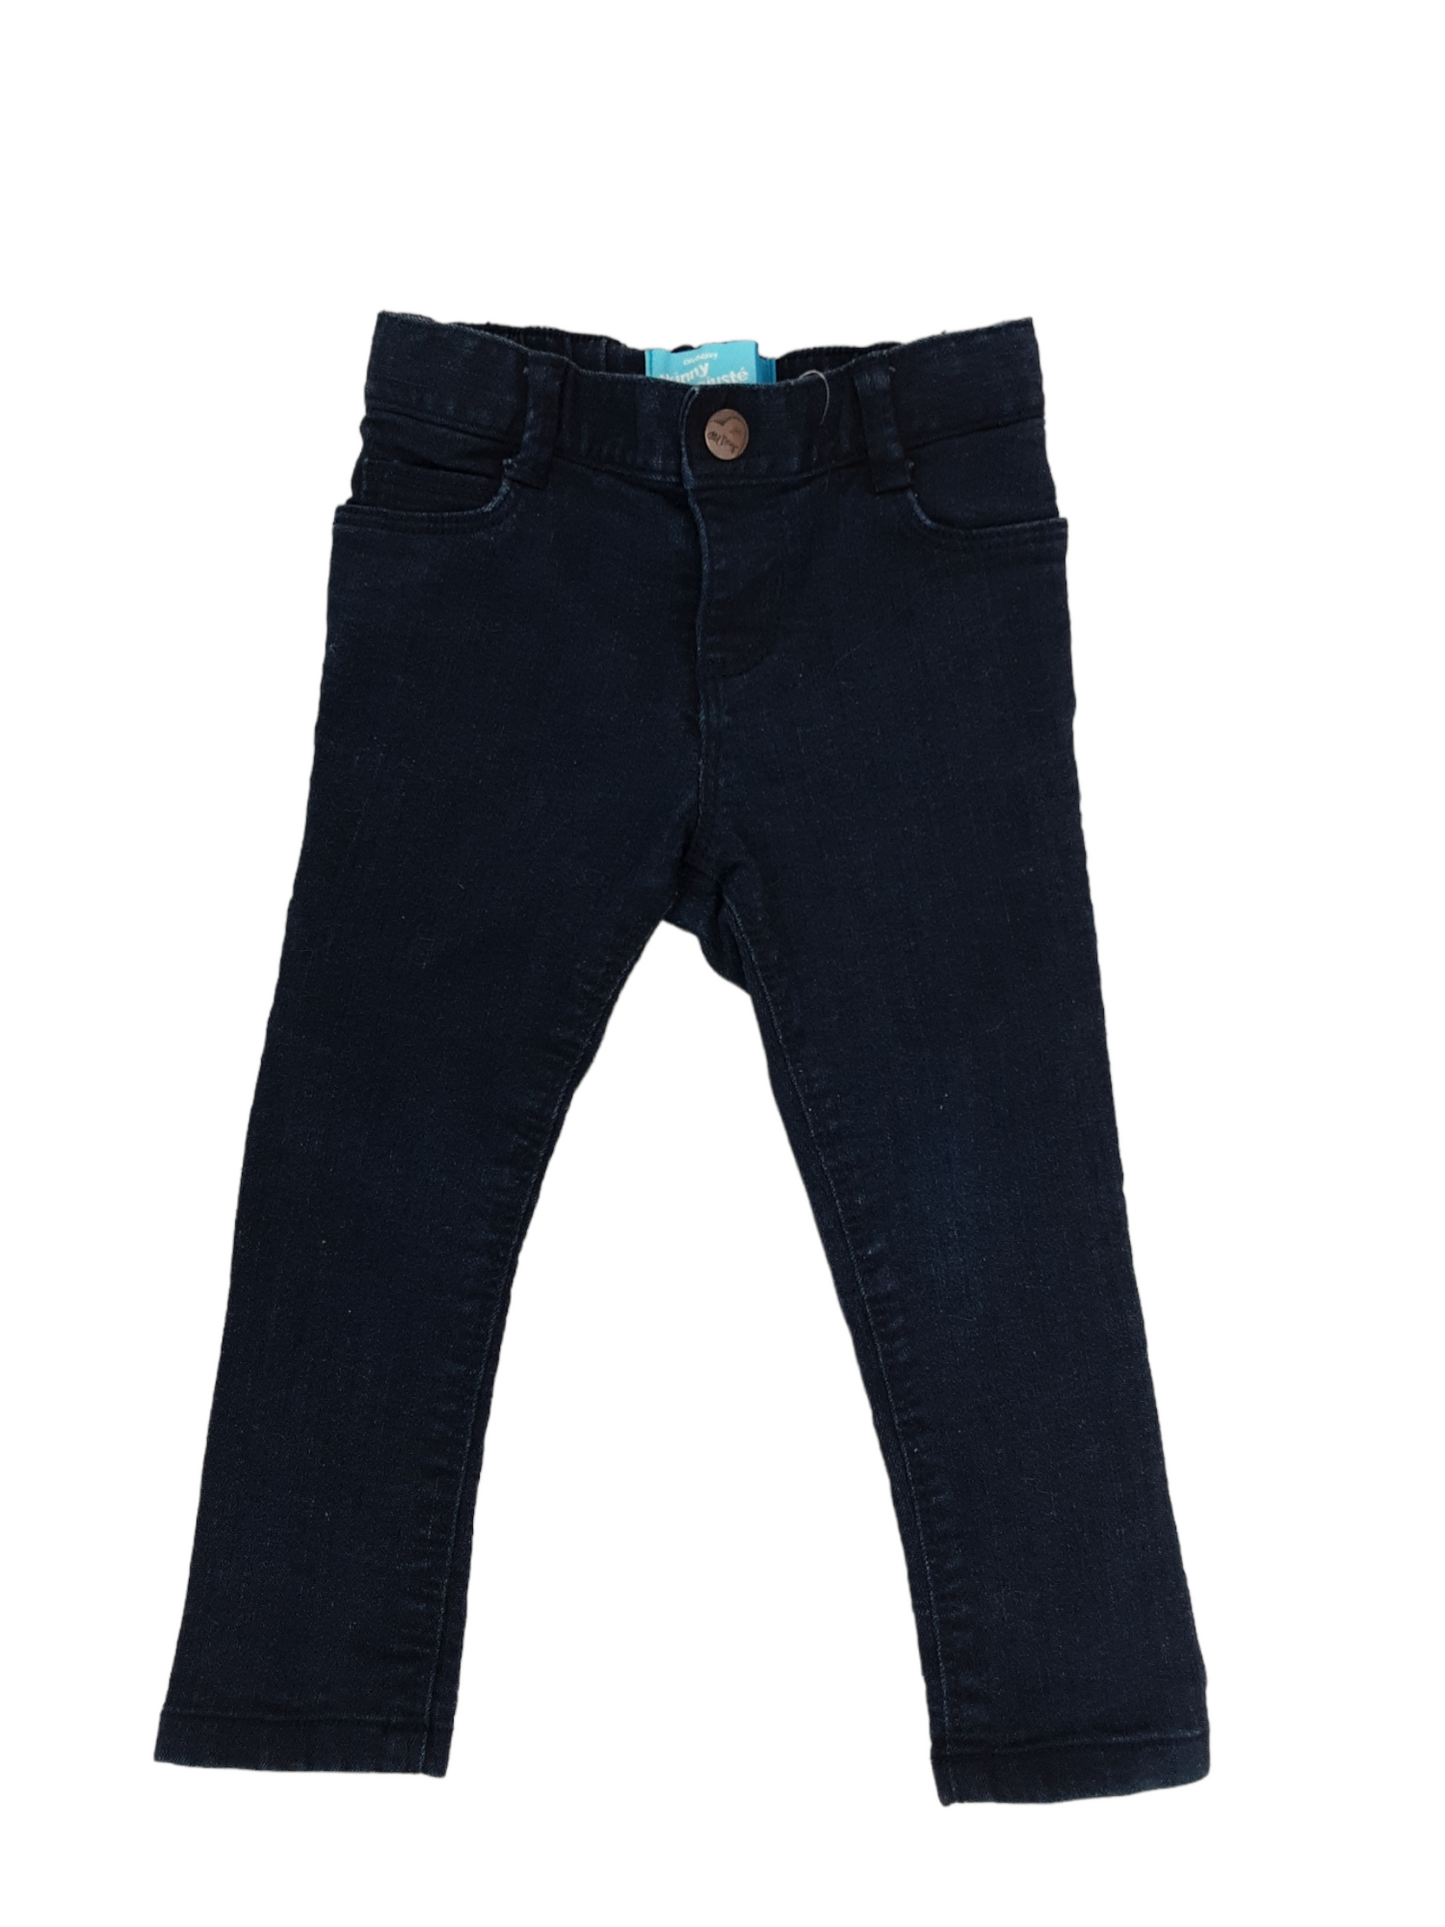 Blue skinny jeans size 2t